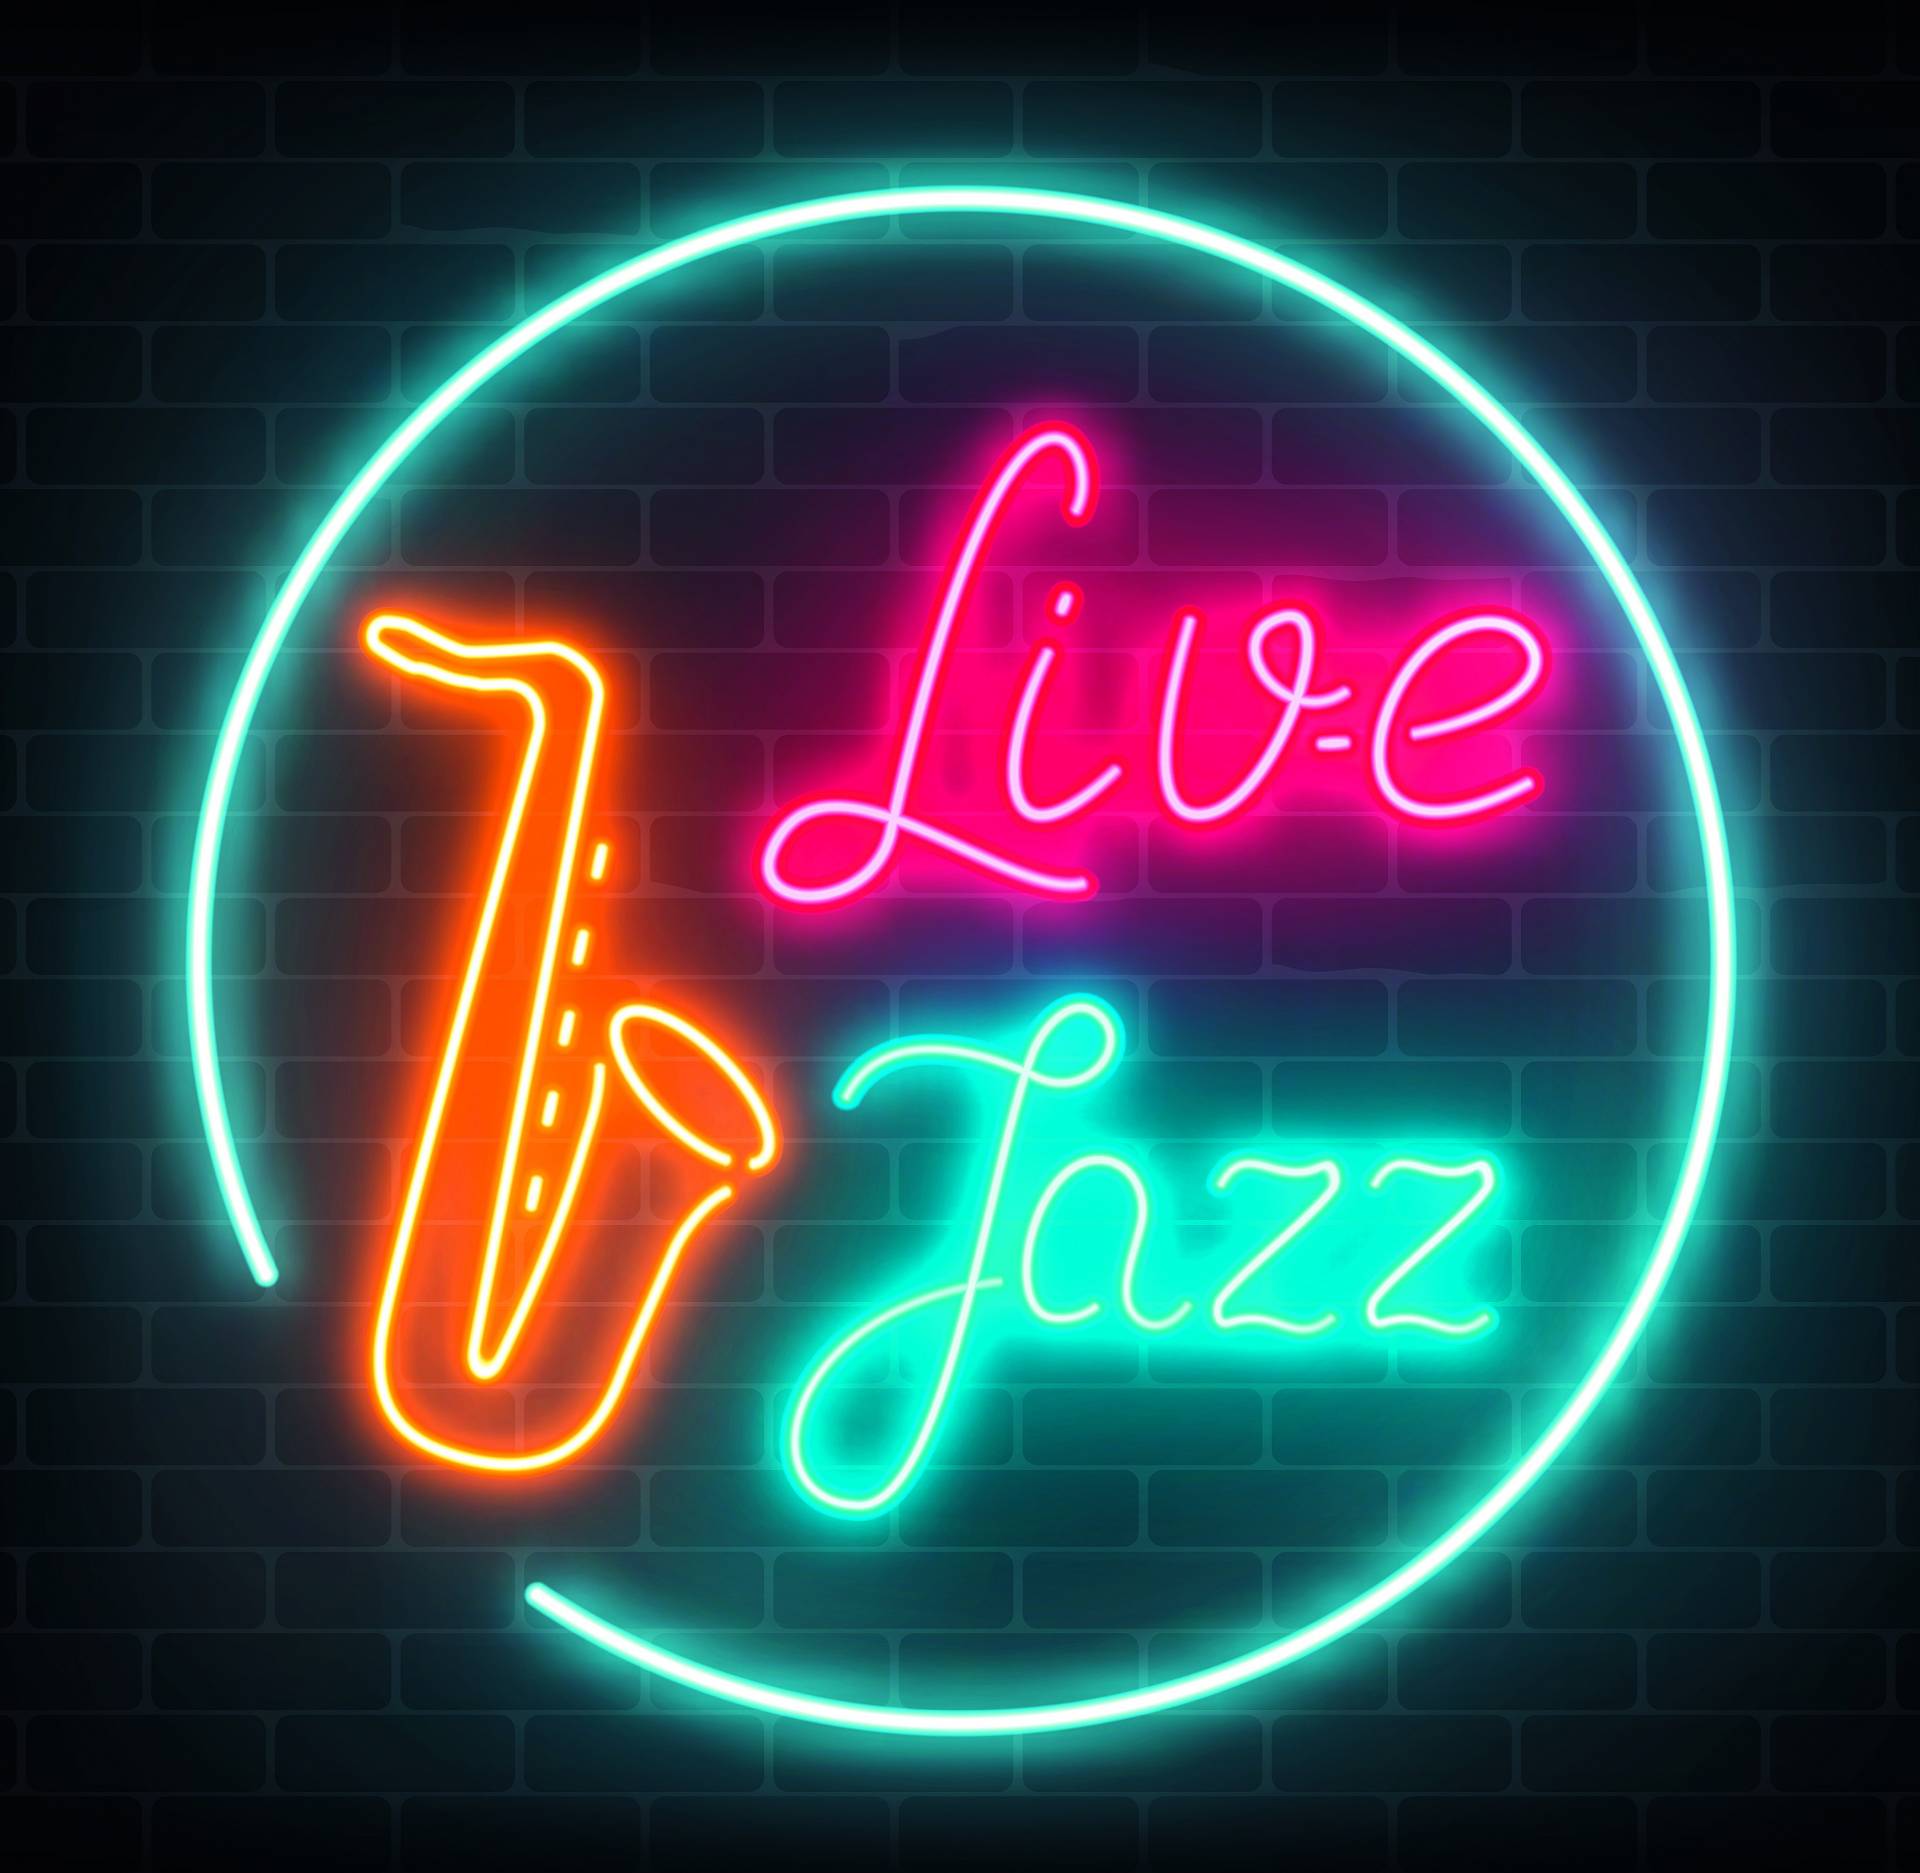 Live Jazz